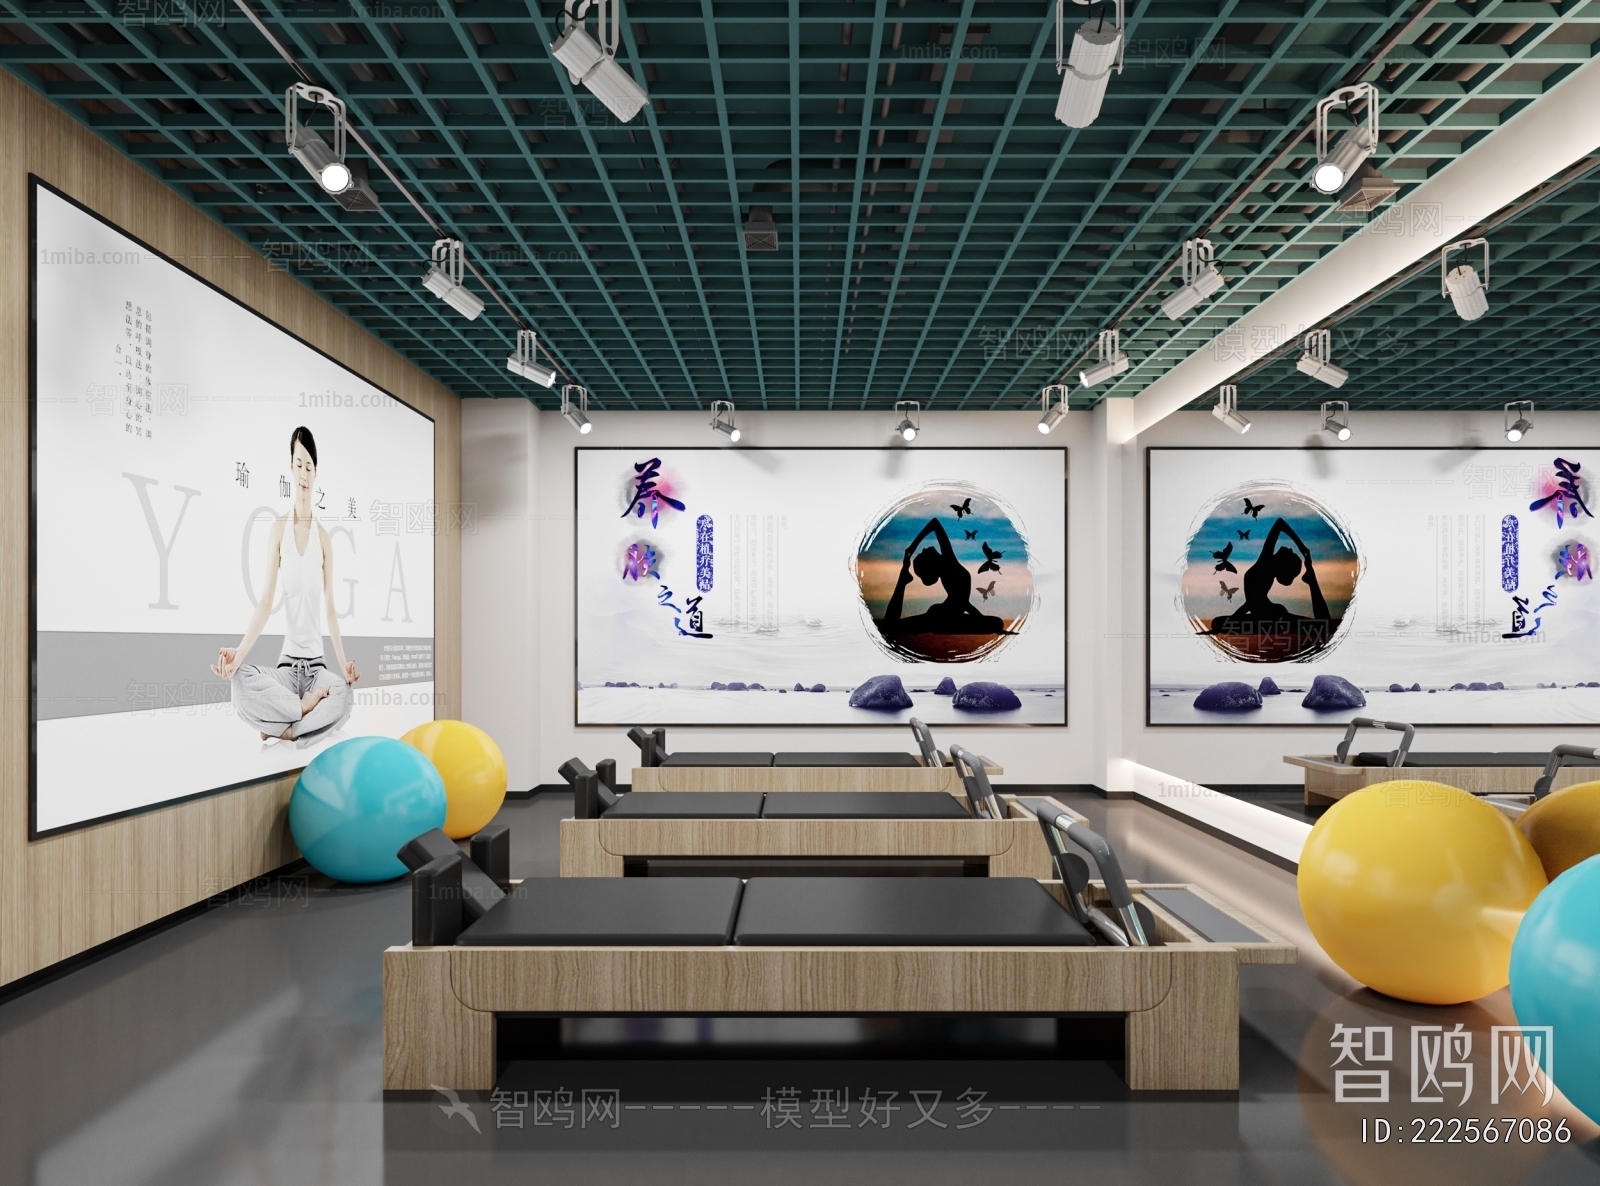 Modern Yoga Room